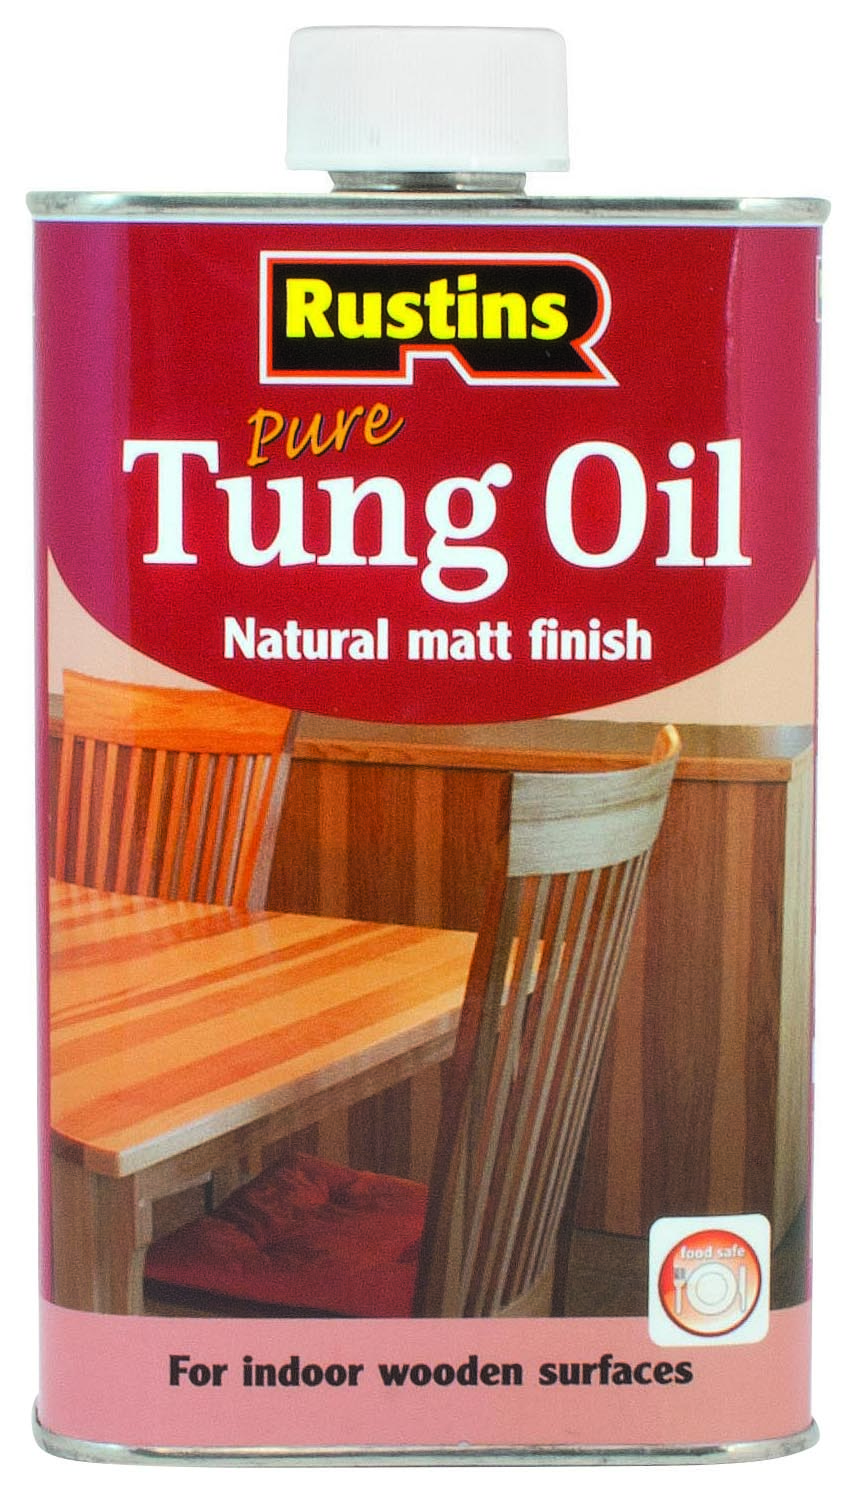 Image of Rustins Tung Oil - 500ml